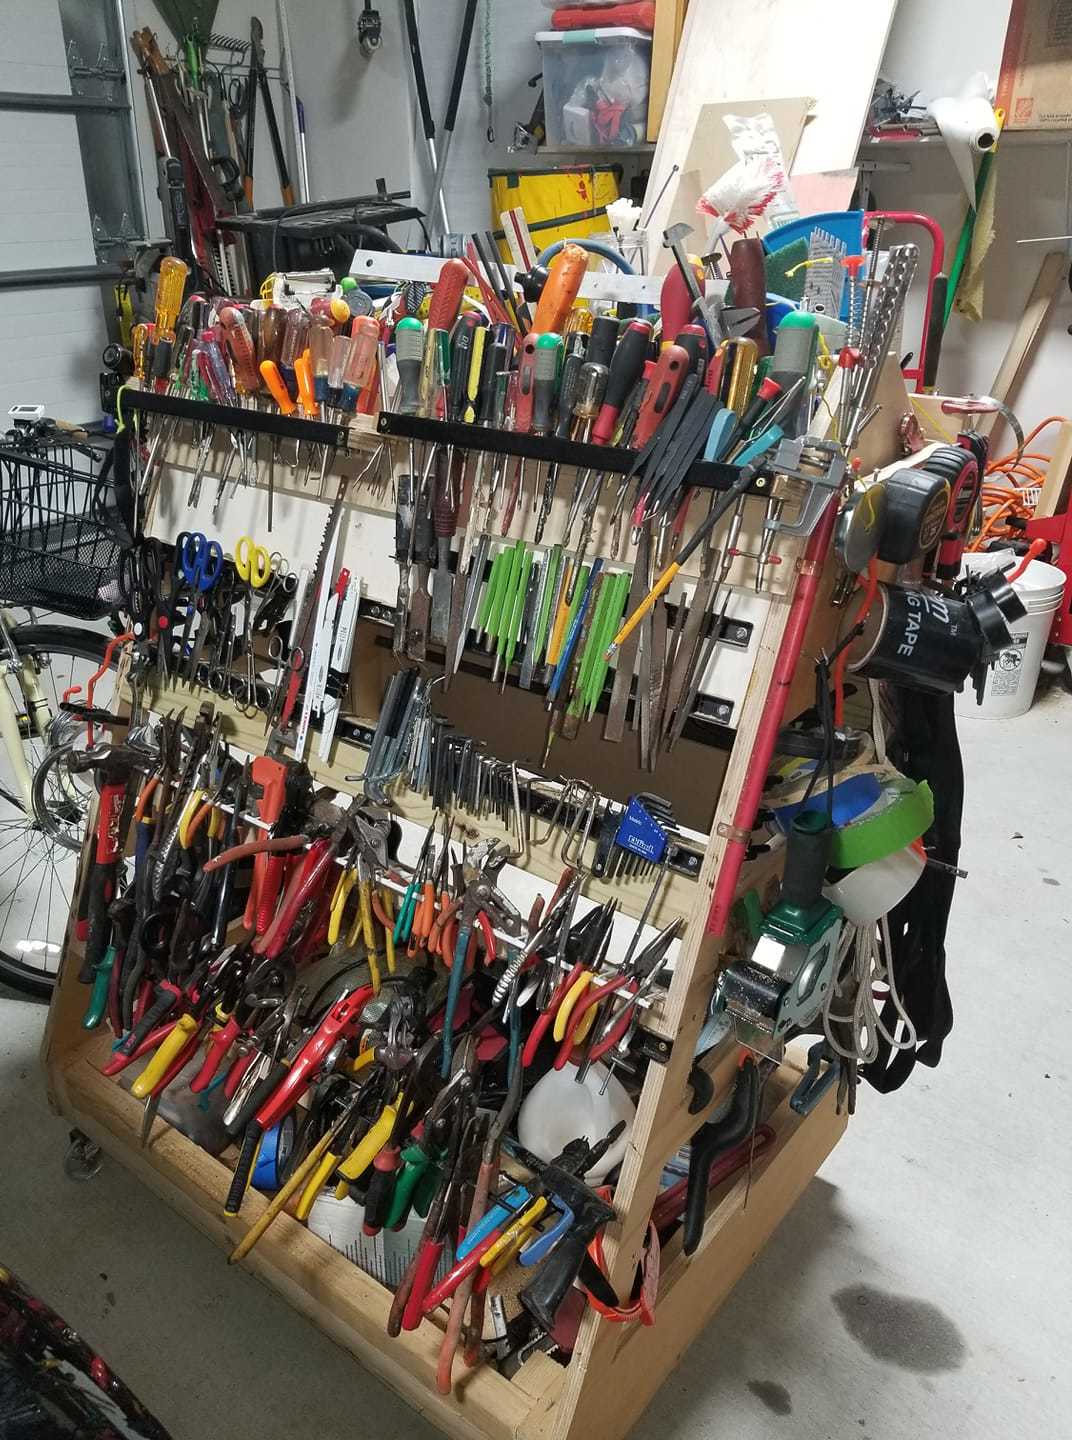 S-ton of tools